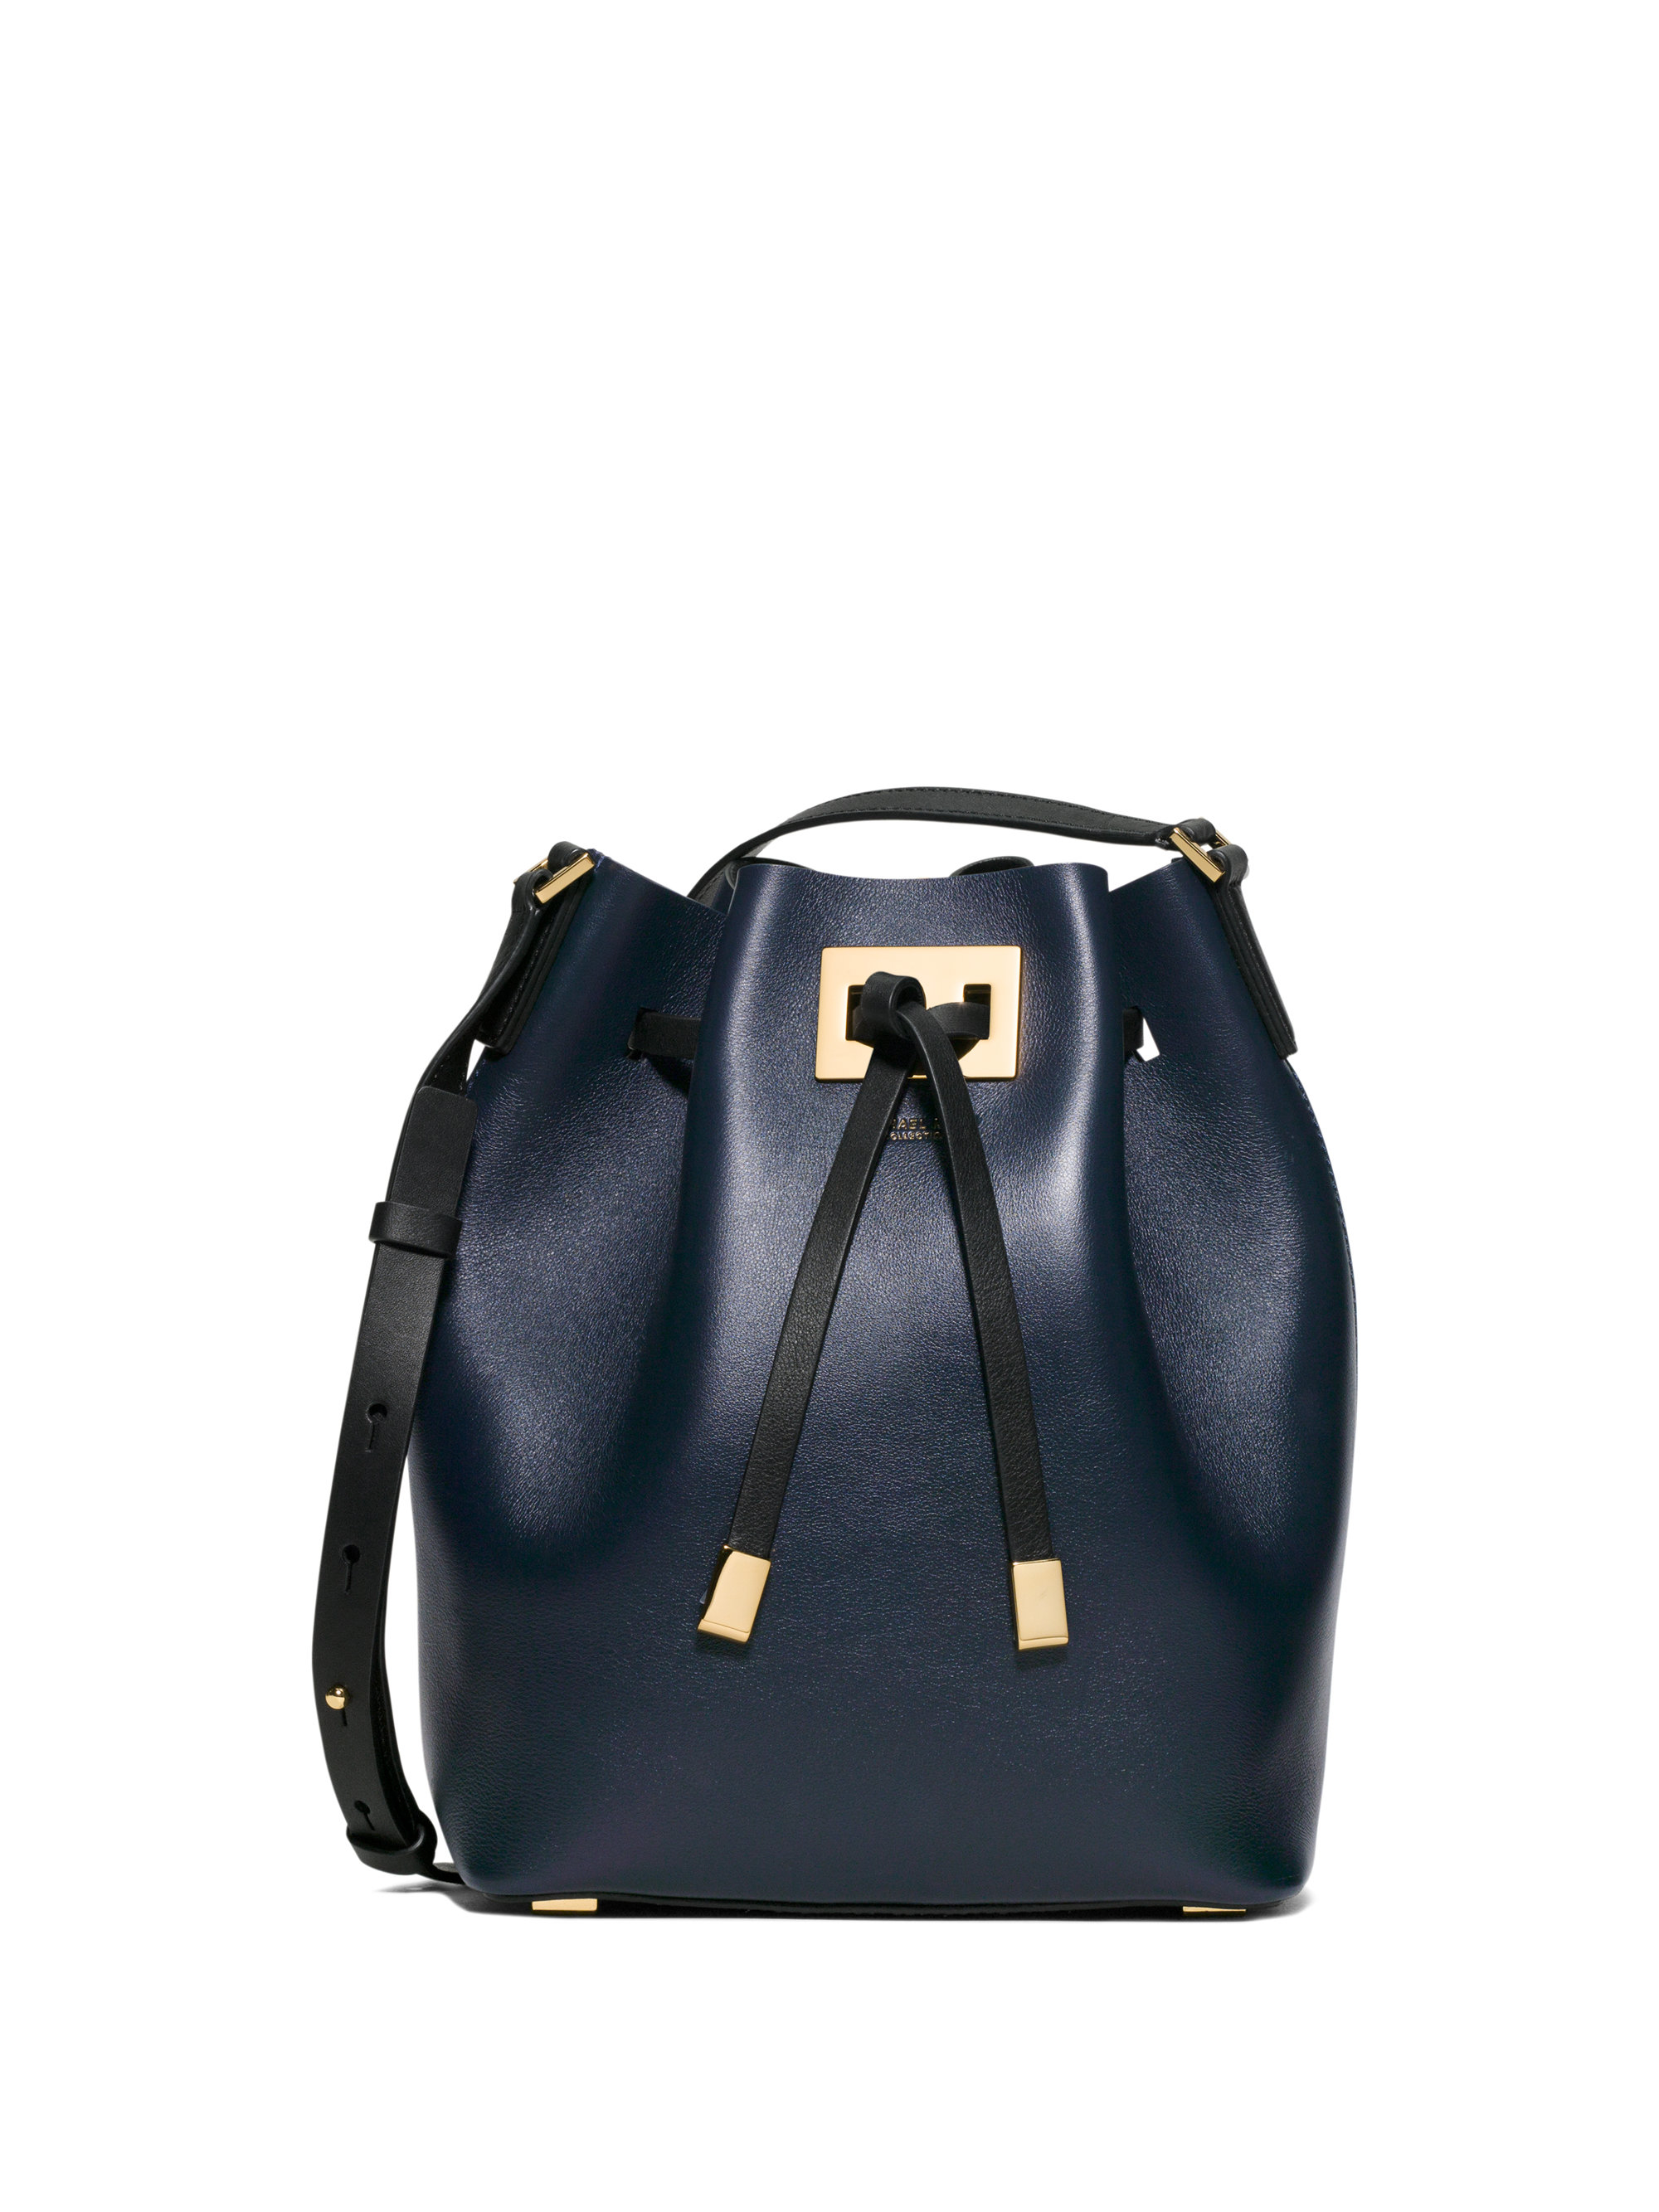 Lyst - Michael Kors Miranda Medium Two-tone Leather Bucket Bag in Blue